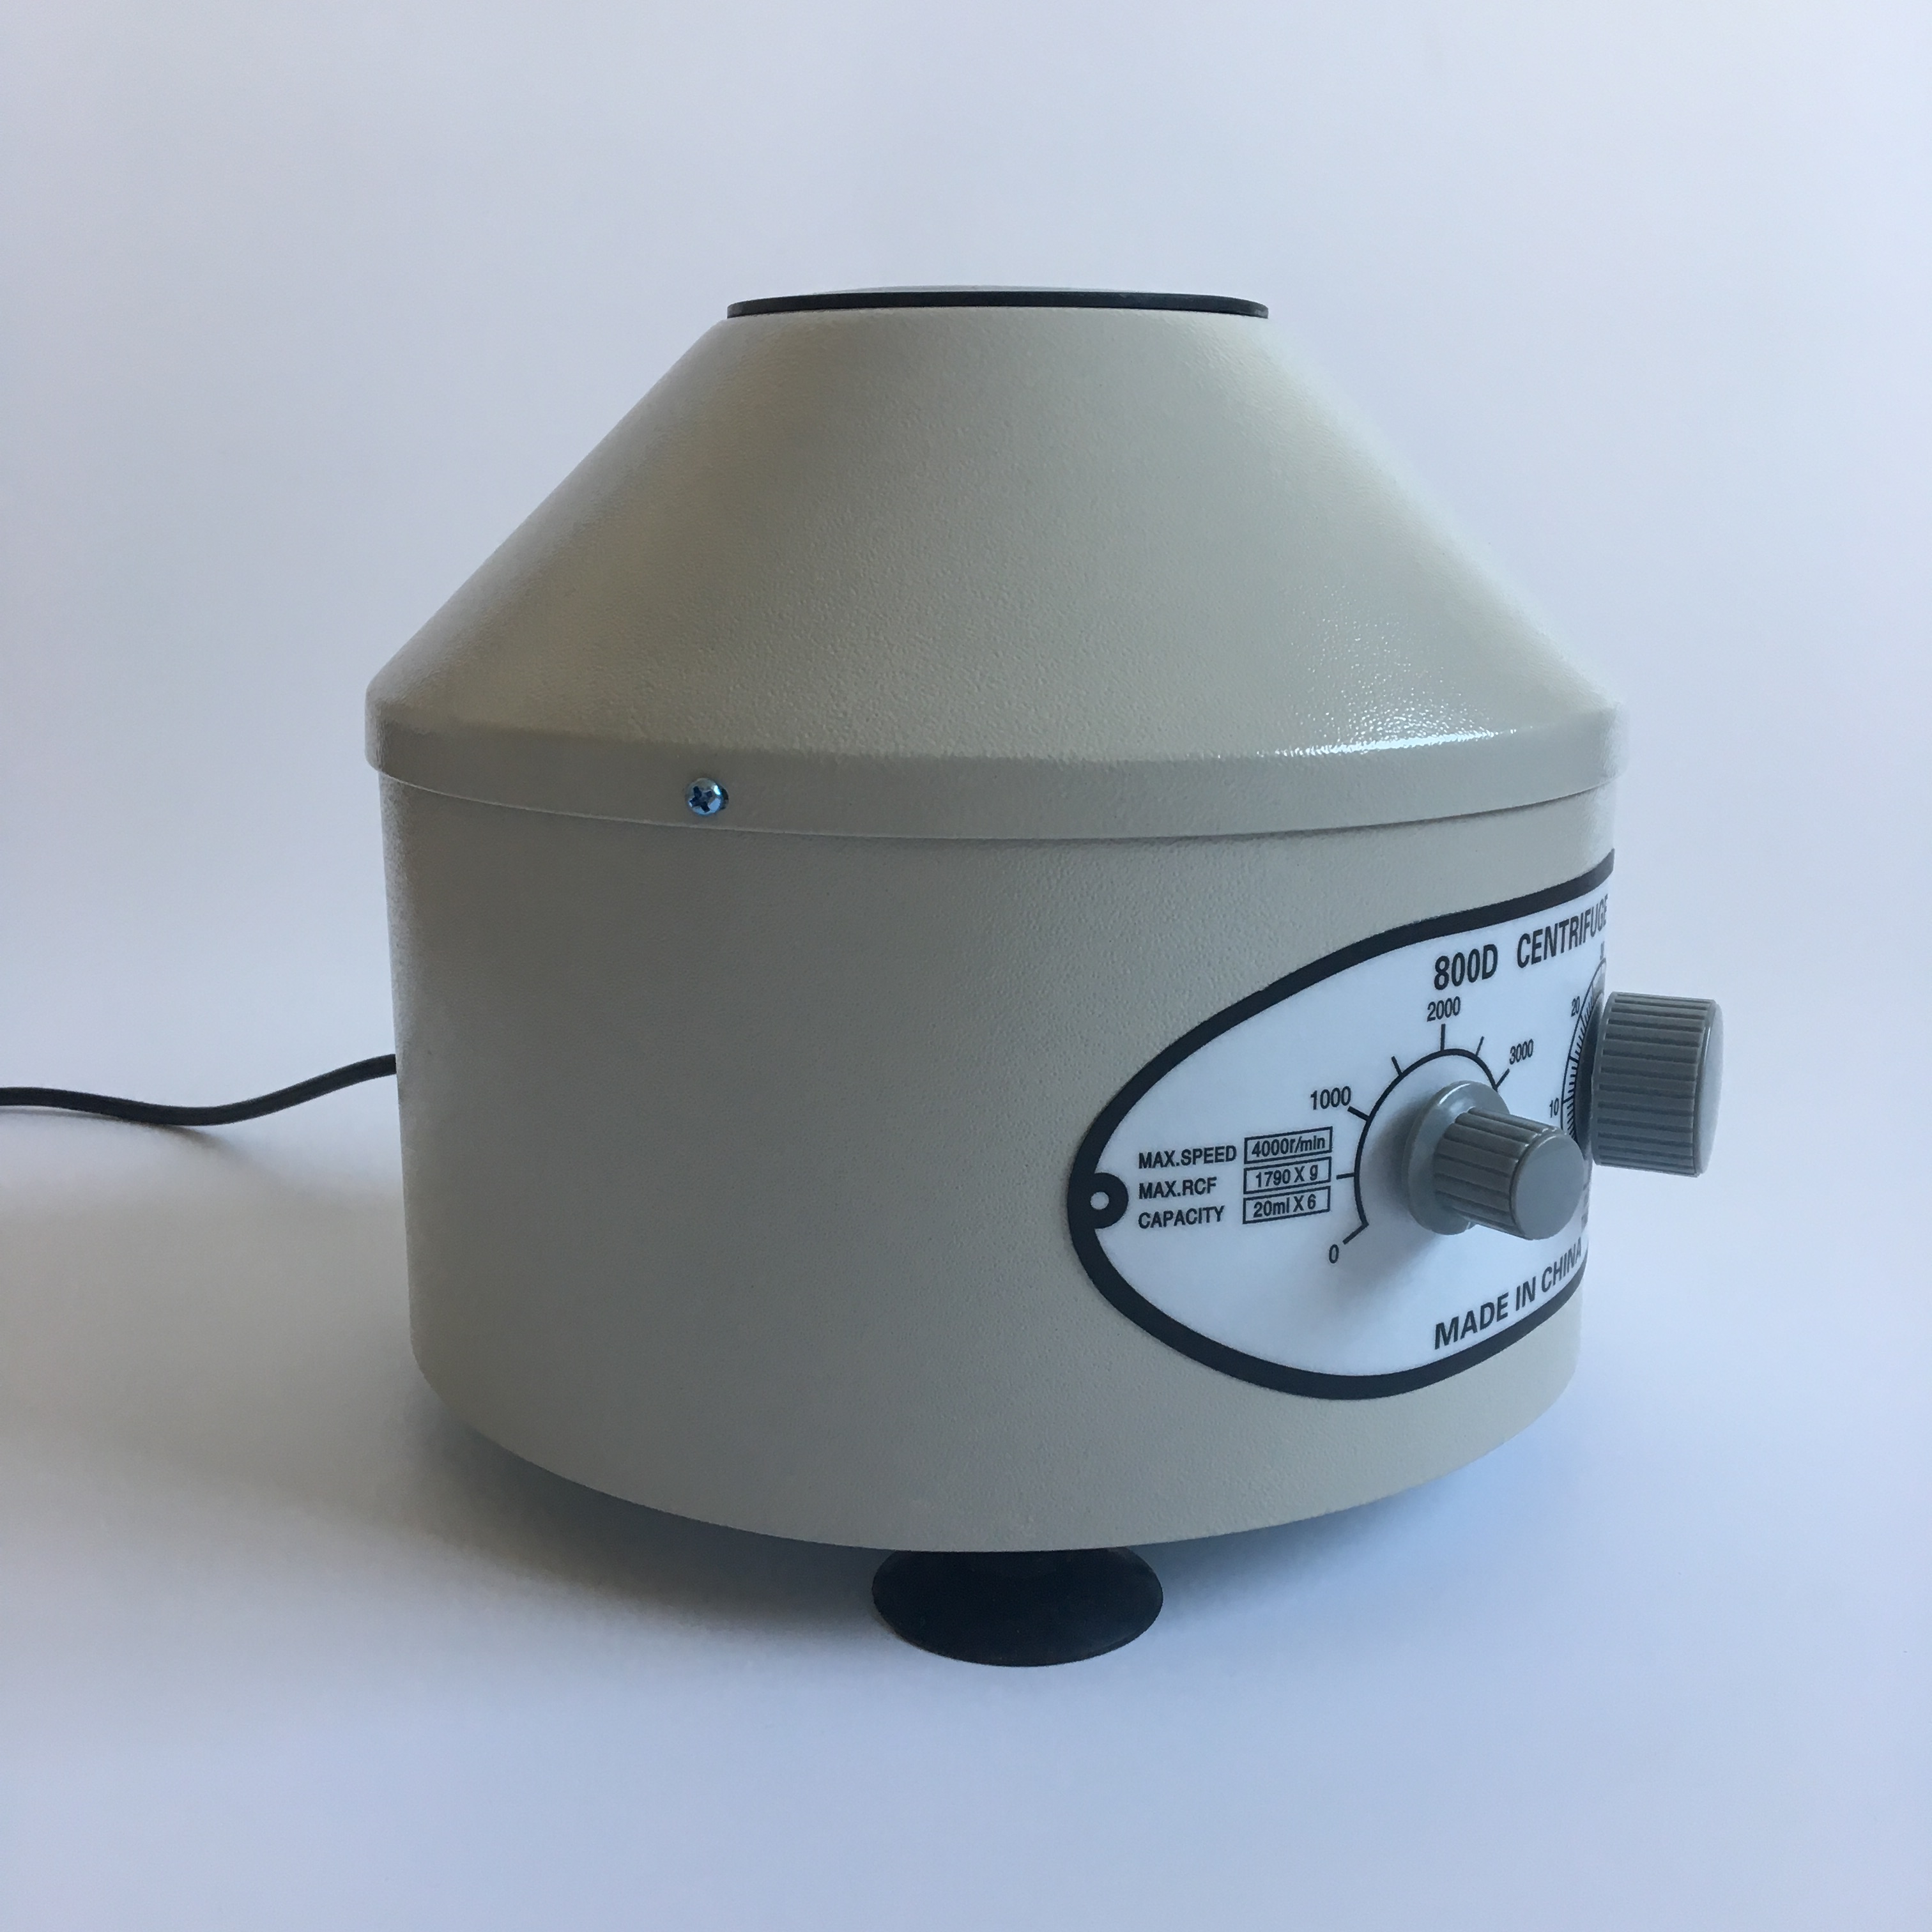 Well-designed P24 Antibody Hiv Test Kits -  lab device mini 800D centrifuge machine with timer – Baysen